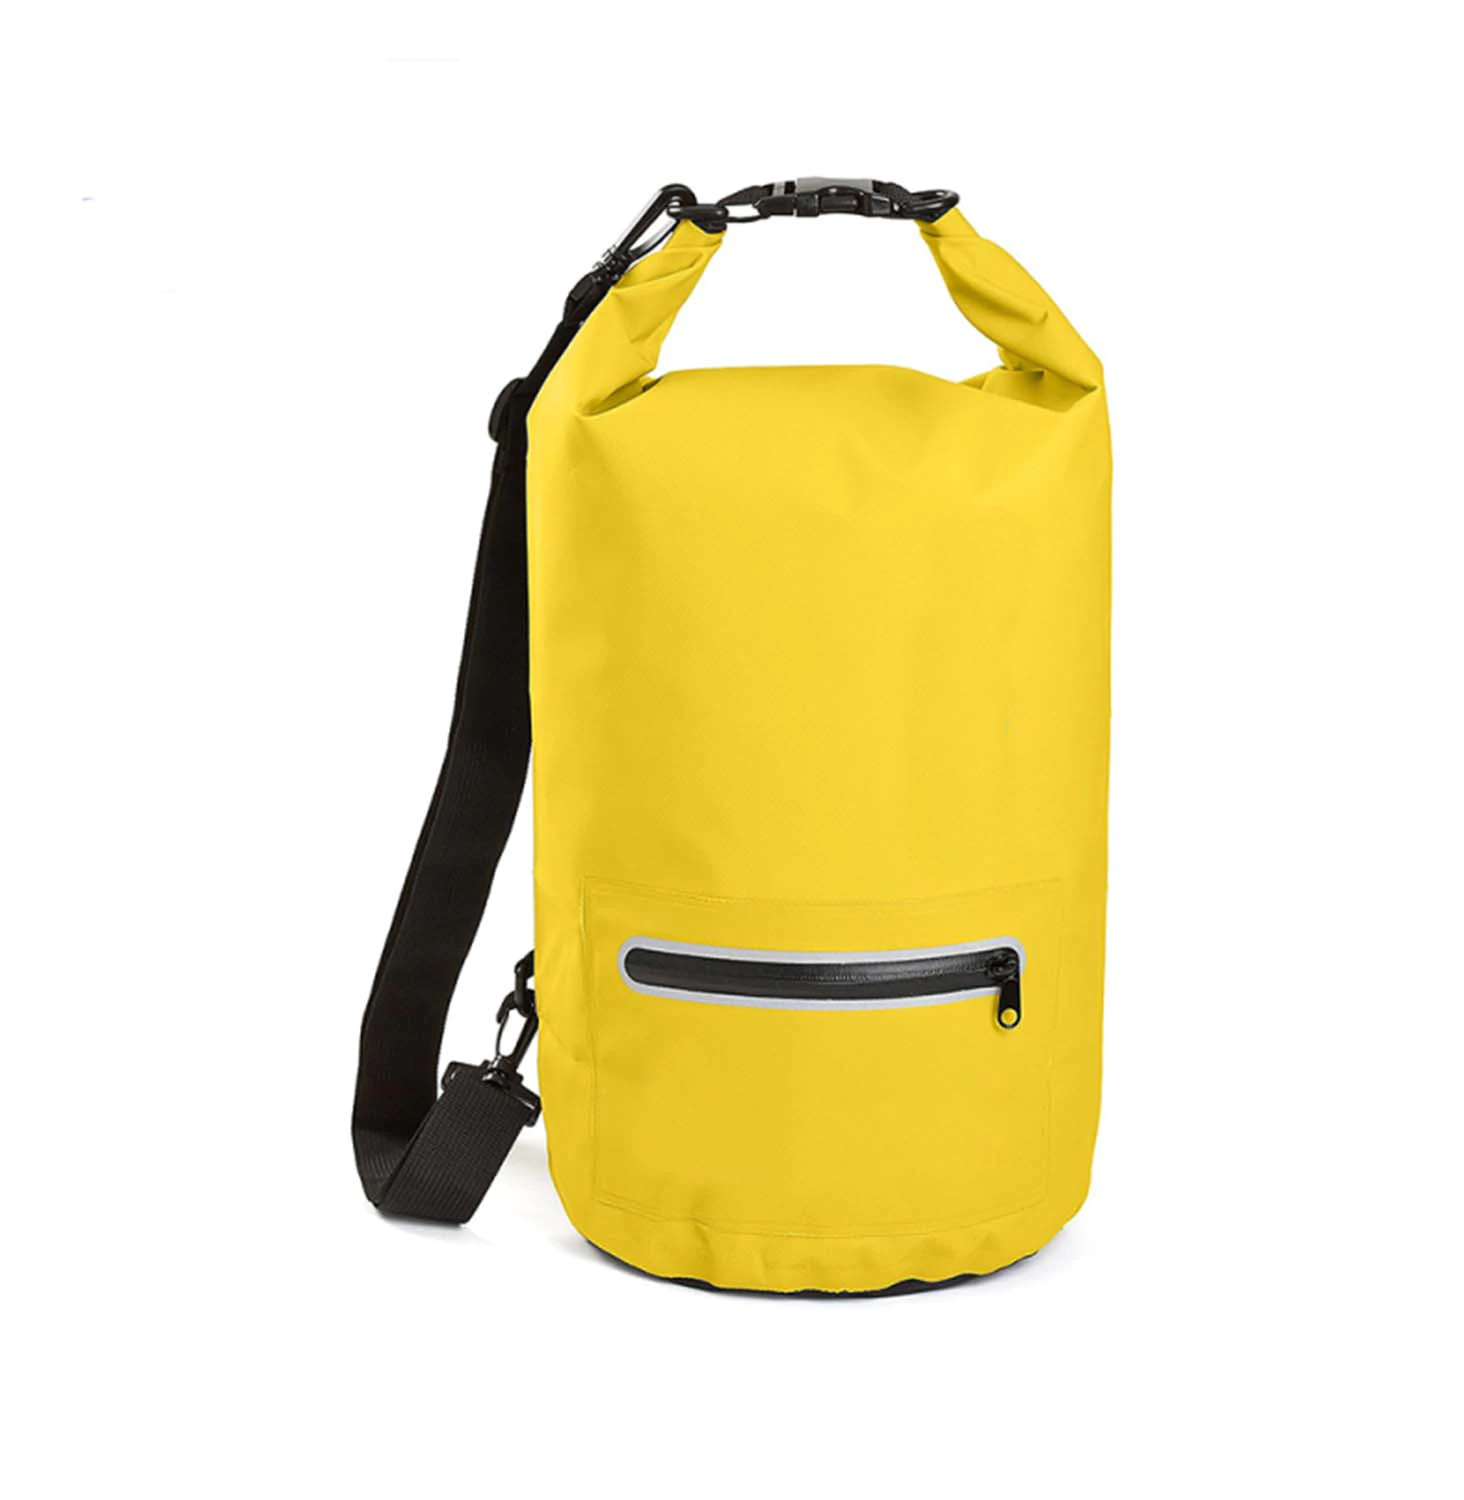 outdoor dry bag with adjustable shoulder strap open water swim buoy flotation device